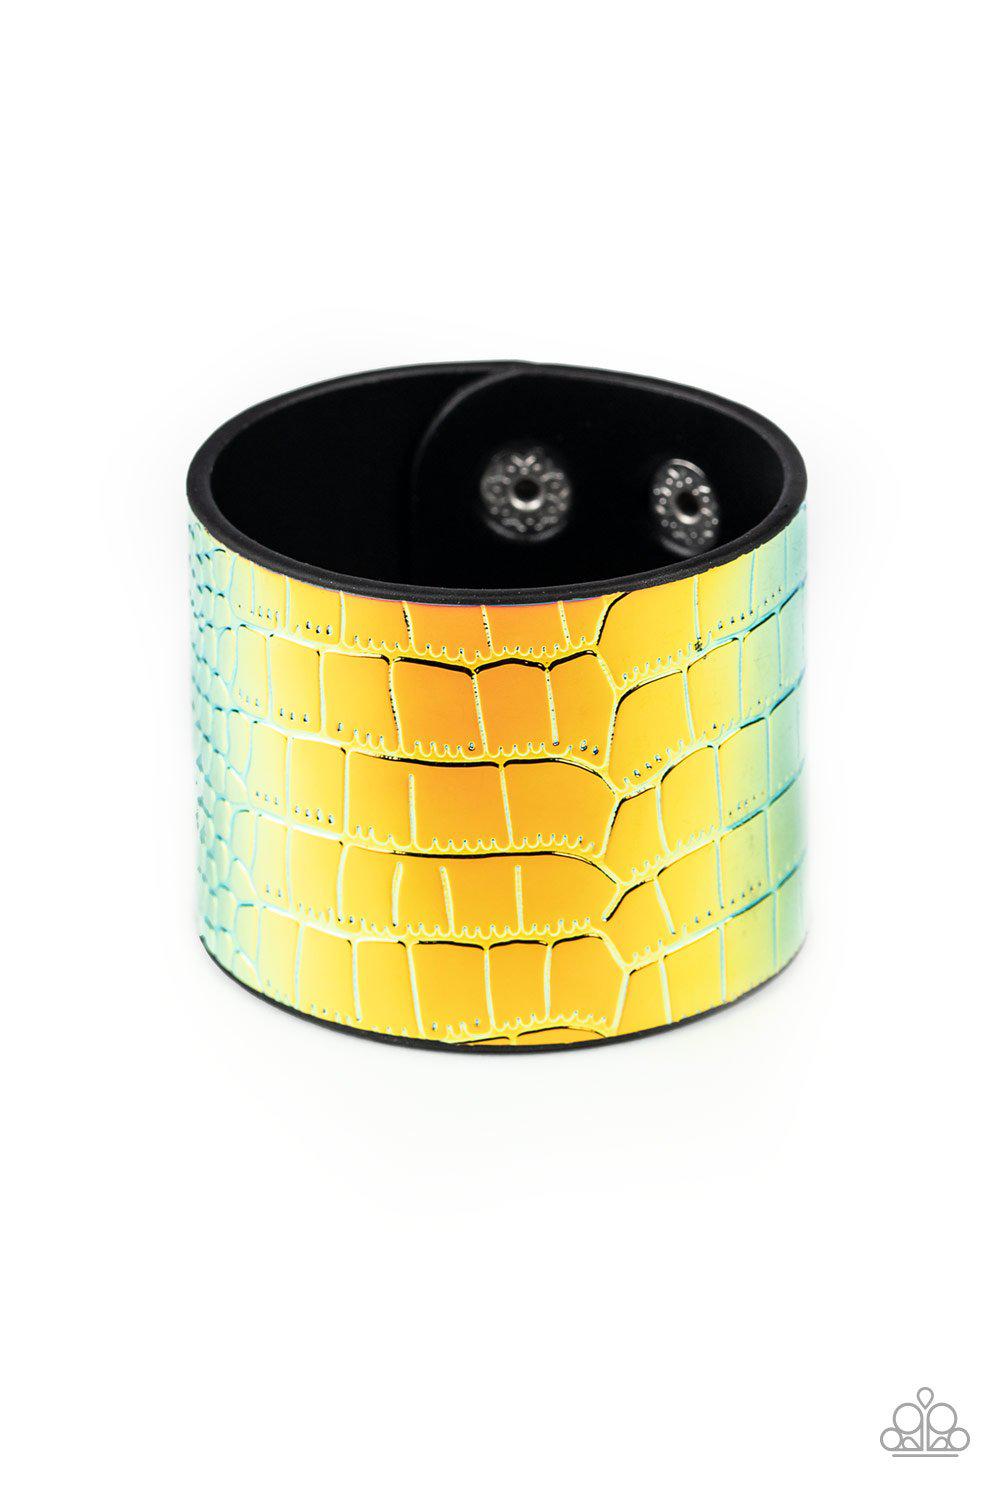 Chroma Croc Multi-color Leather Wrap Snap Bracelet - Paparazzi Accessories-CarasShop.com - $5 Jewelry by Cara Jewels